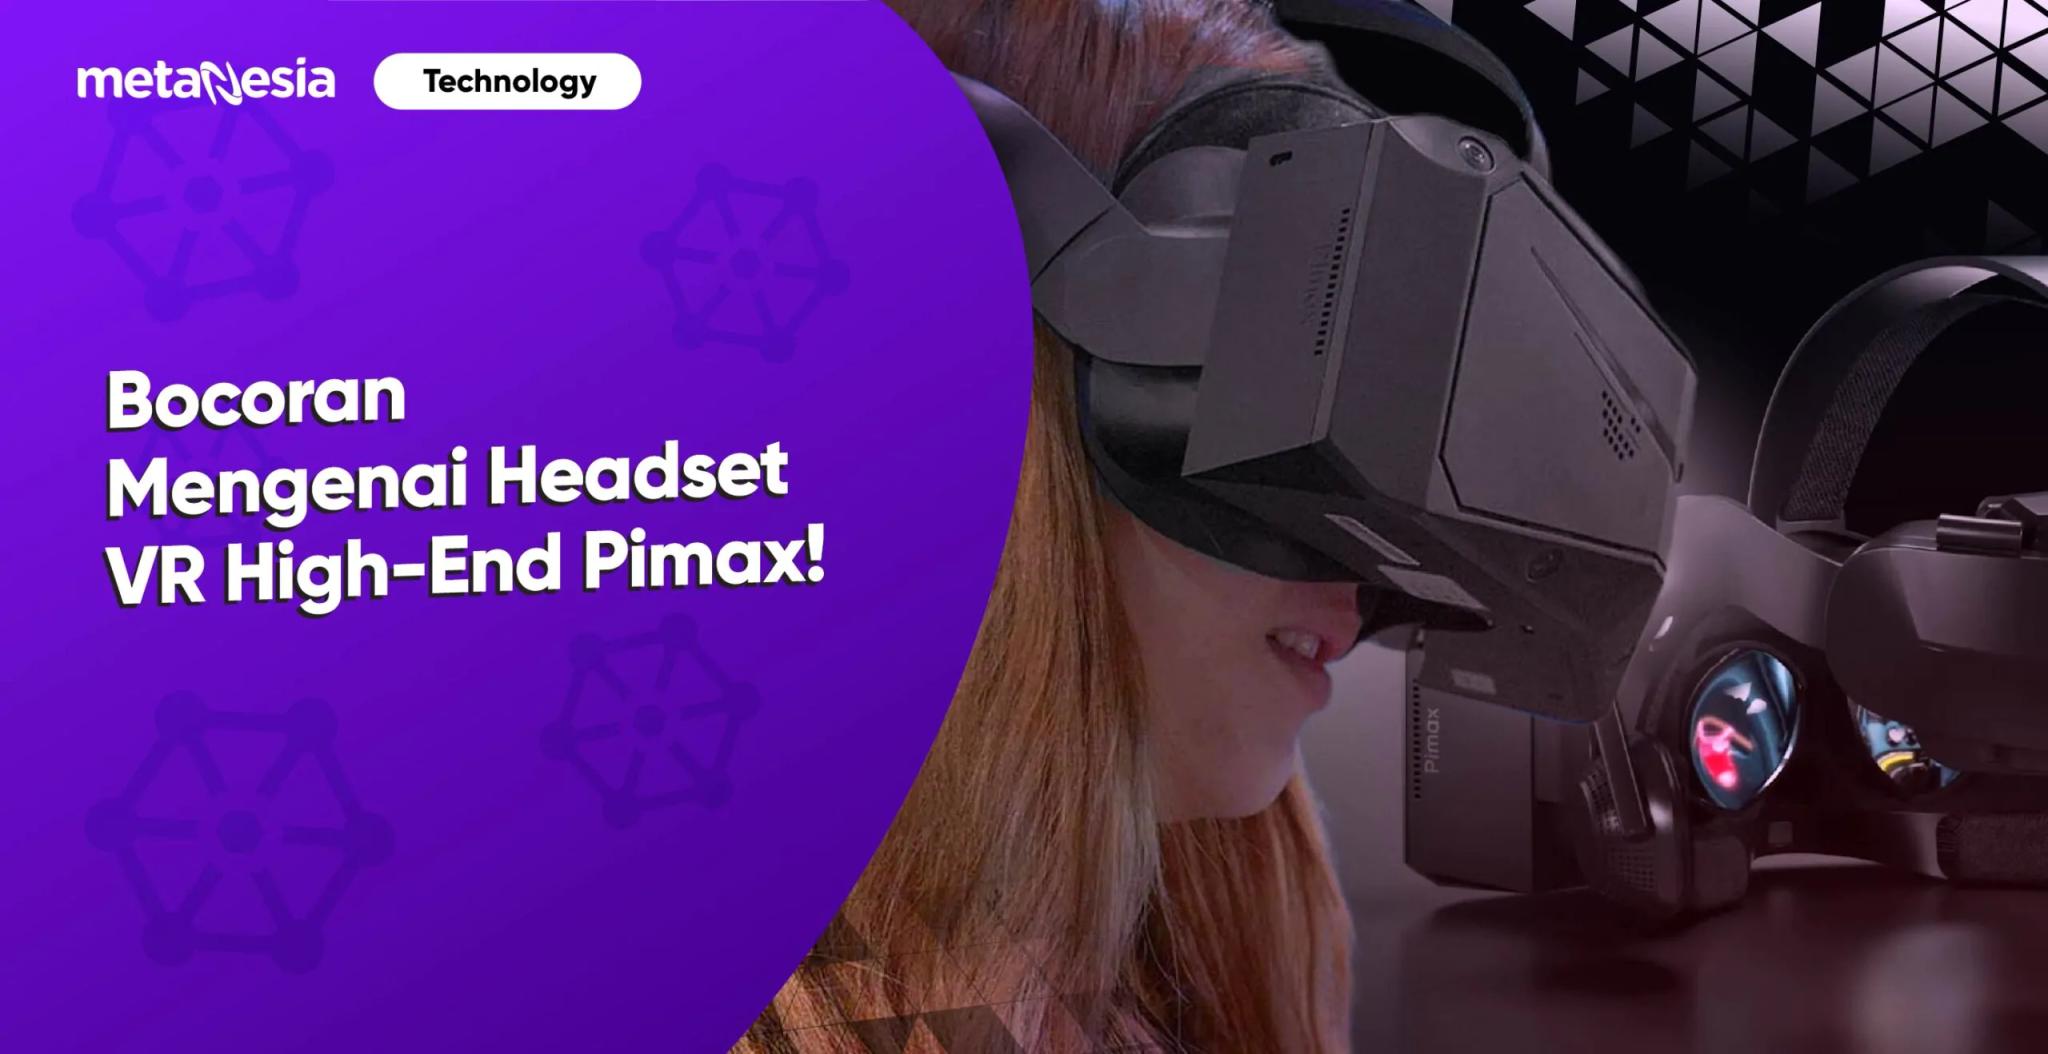 Bocoran Mengenai Headset VR High-end dari Pimax!